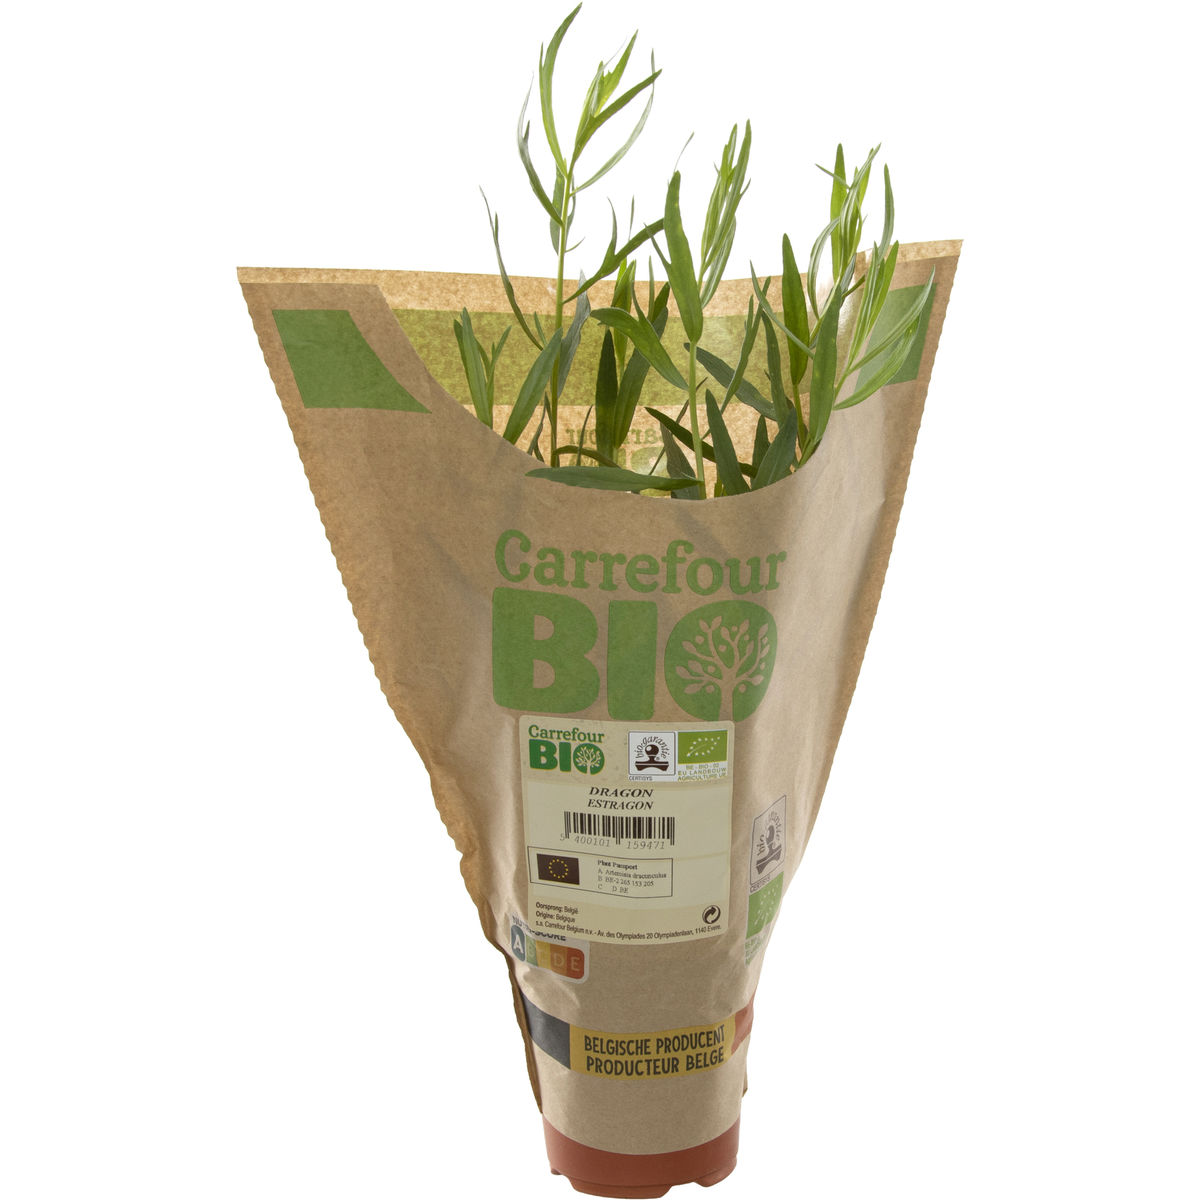 Carrefour BIO Estragon en pot